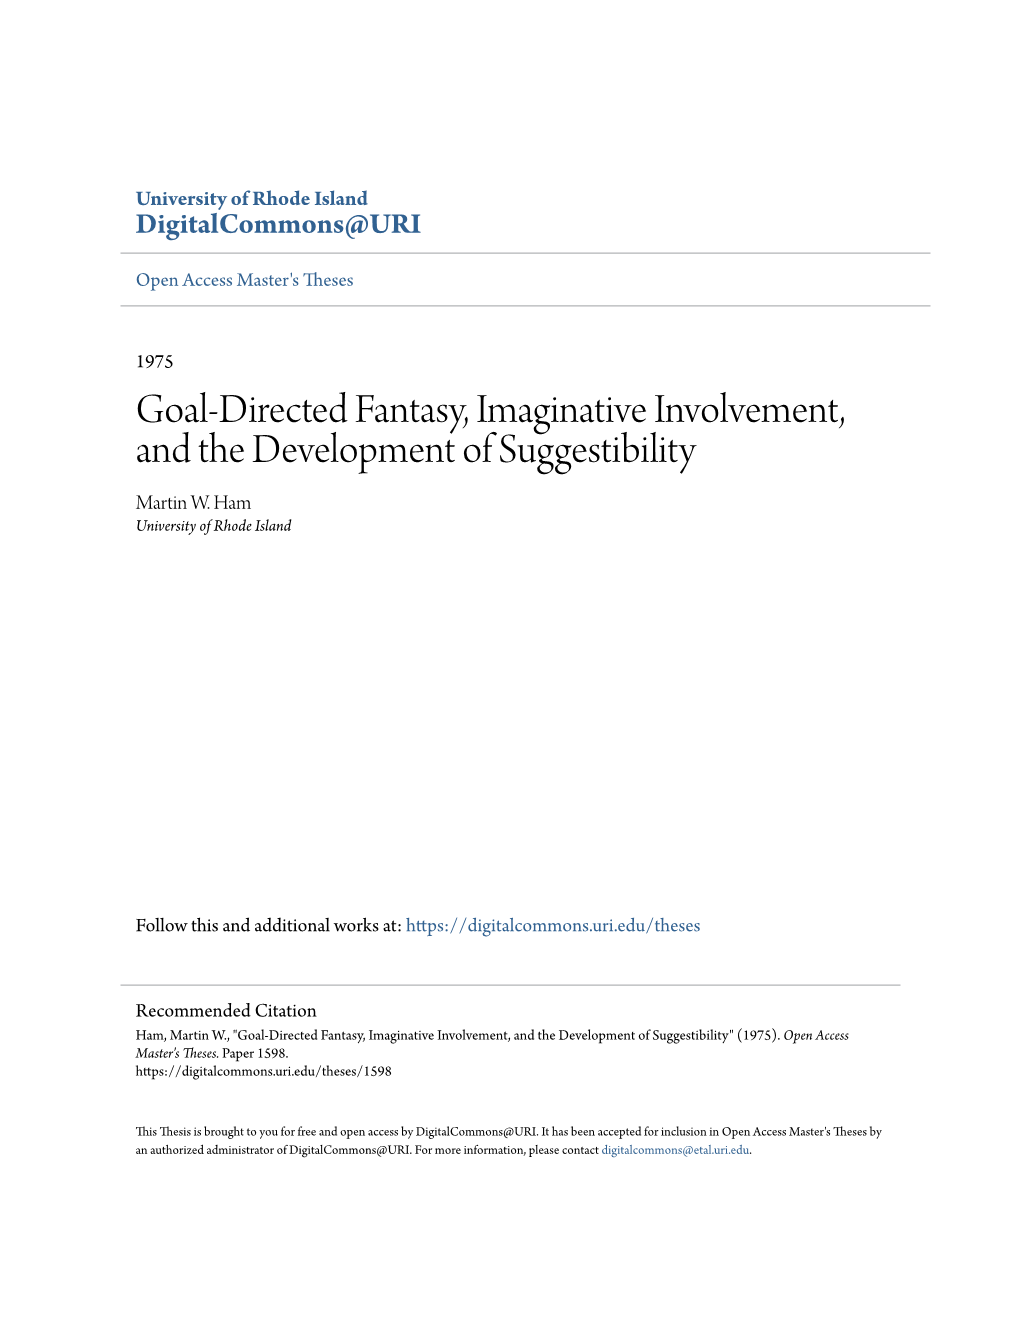 Goal-Directed Fantasy, Imaginative Involvement, and the Development of Suggestibility Martin W